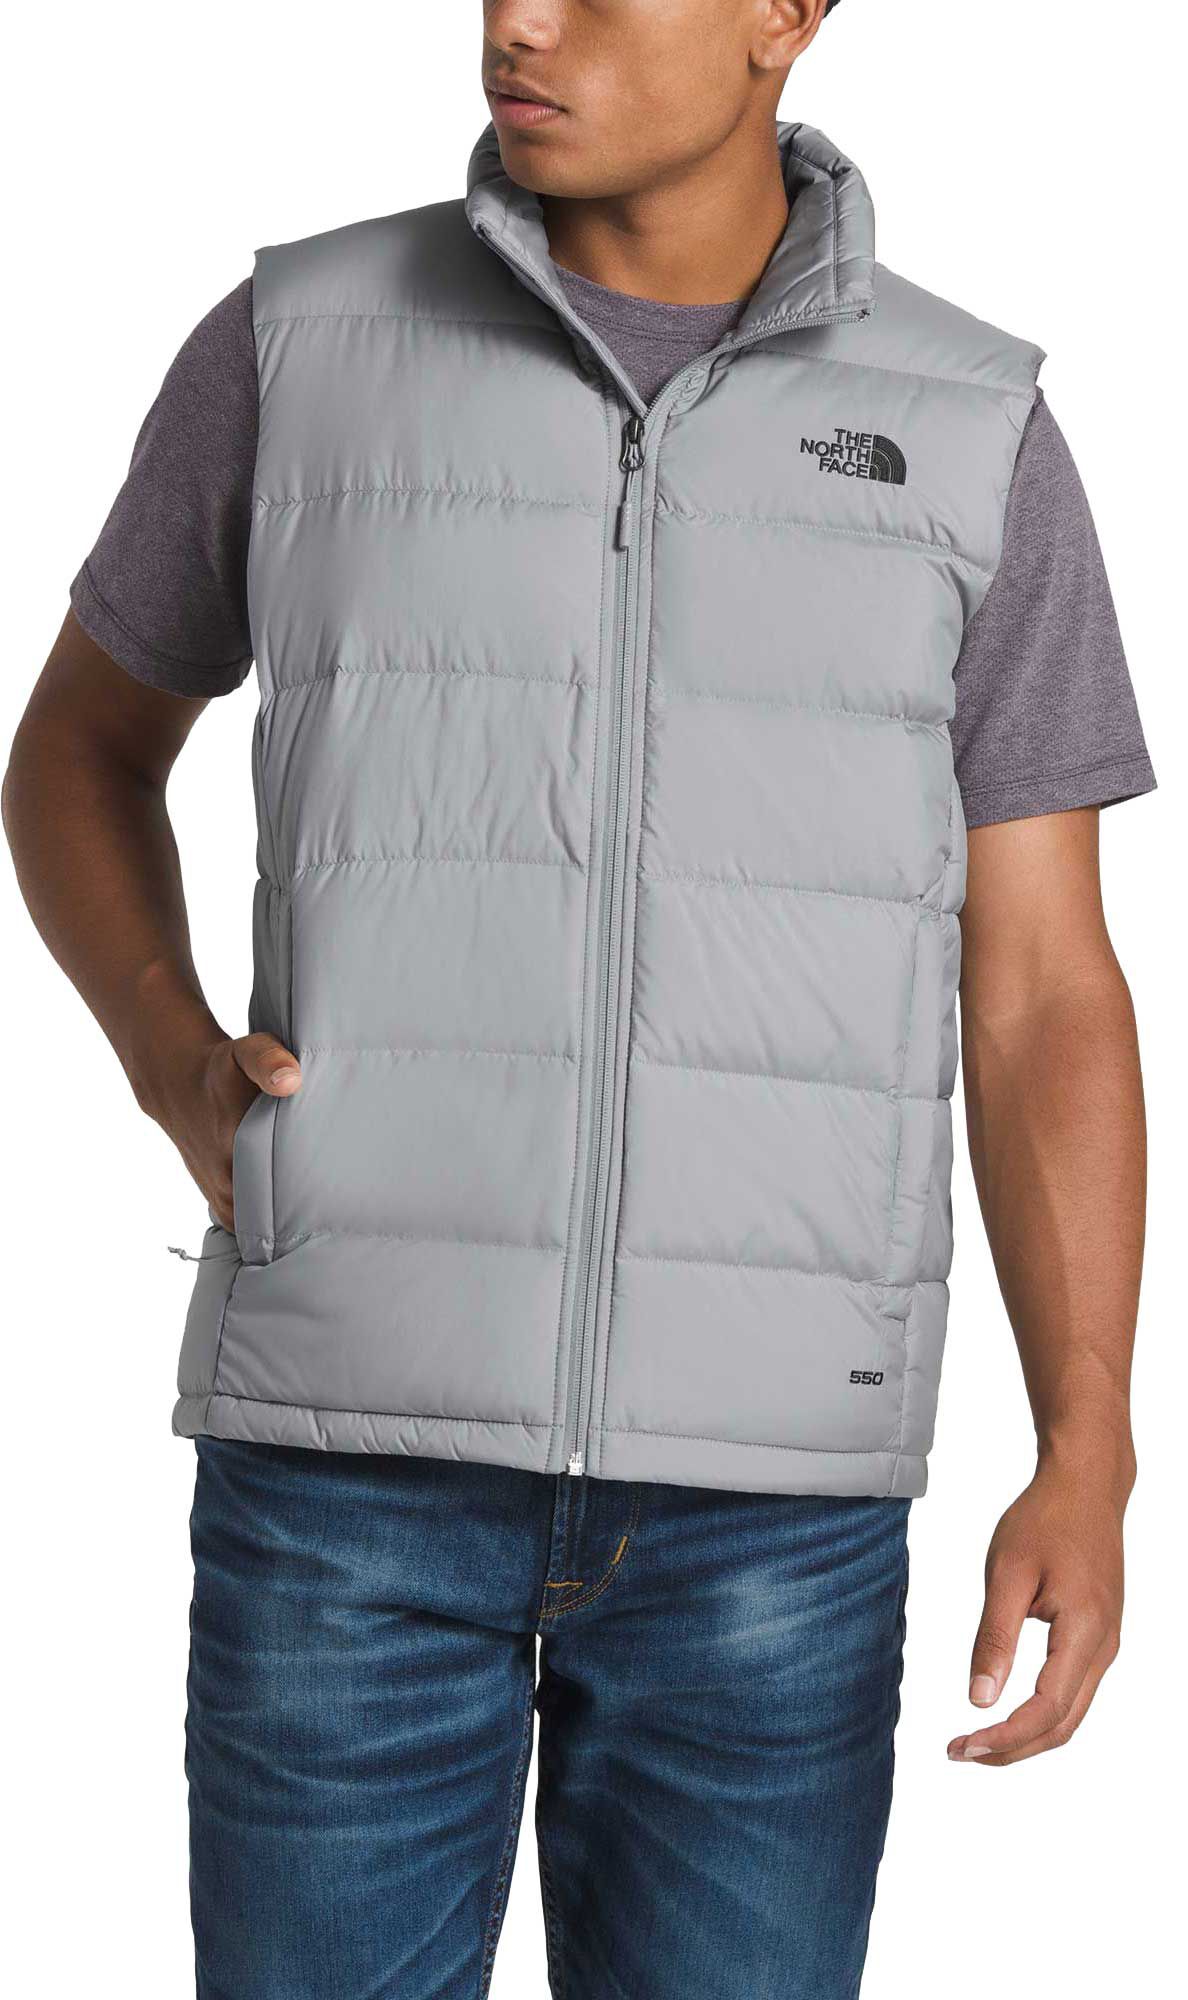 the north face mens vest sale Online 